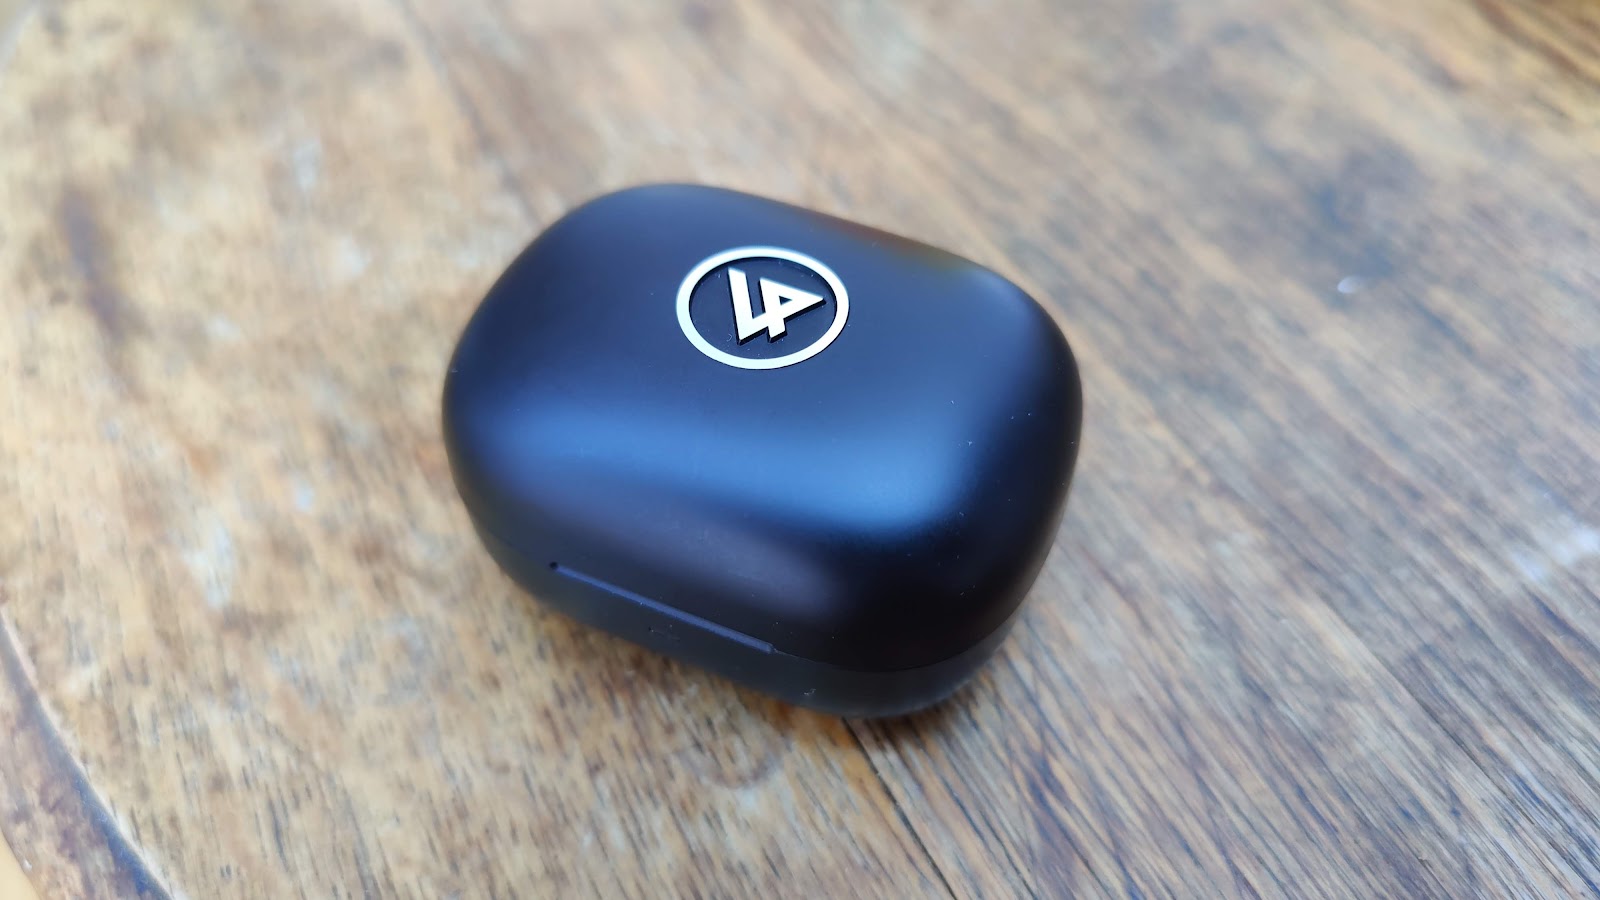 An image of the Lypertek PurePlay Z5 earplug charging cover, closed